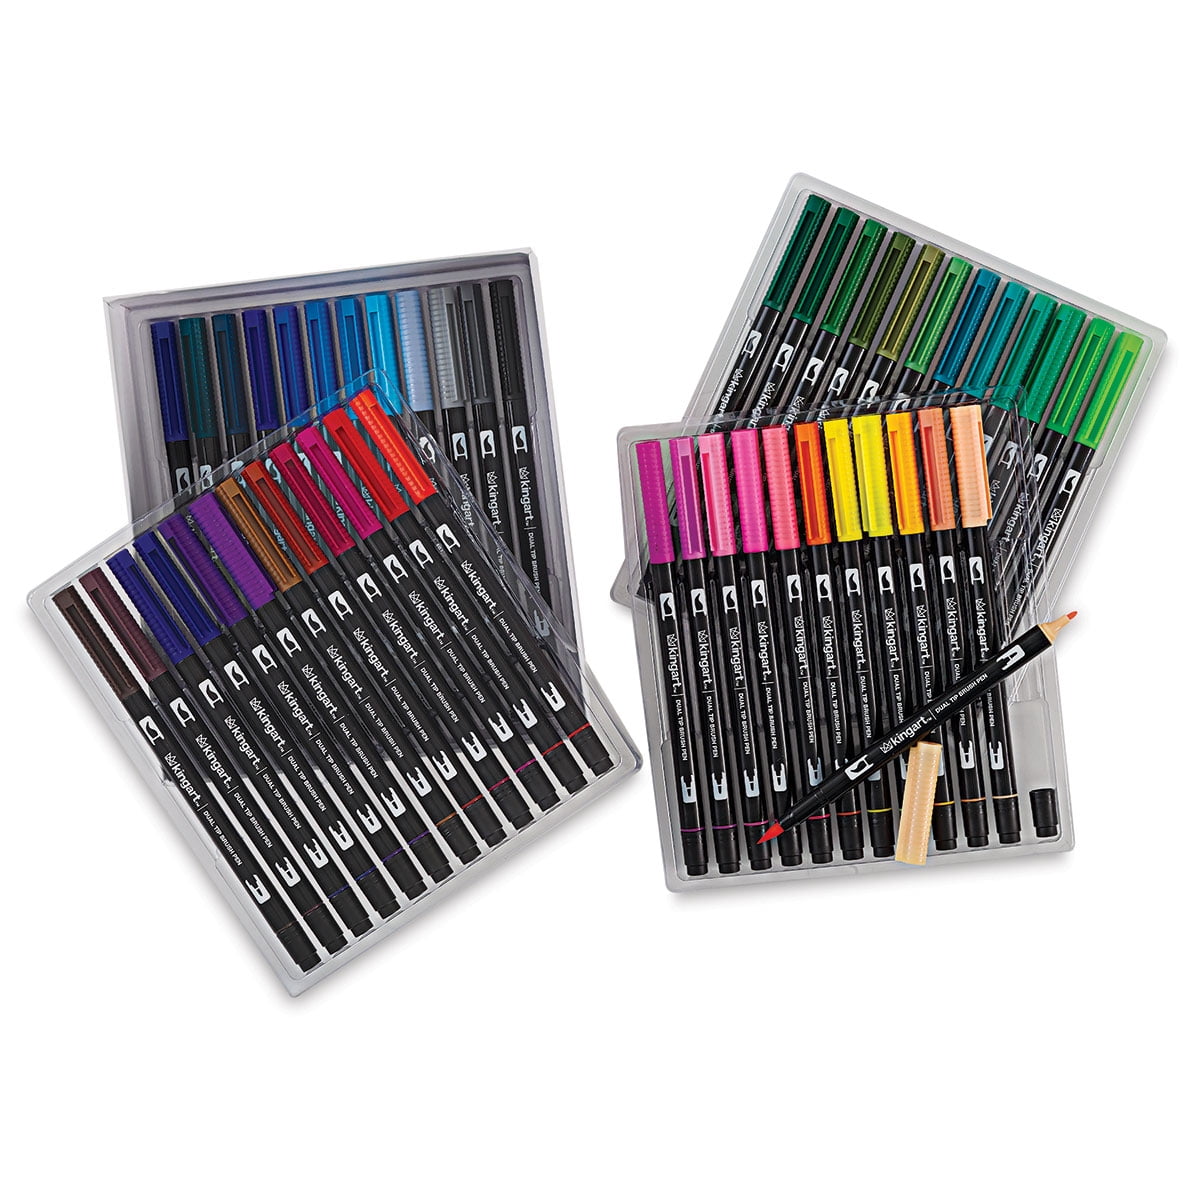 Liqui-Mark Dual Tip Brush & Fine Top Marker Set of 20 Colors (BNIB)